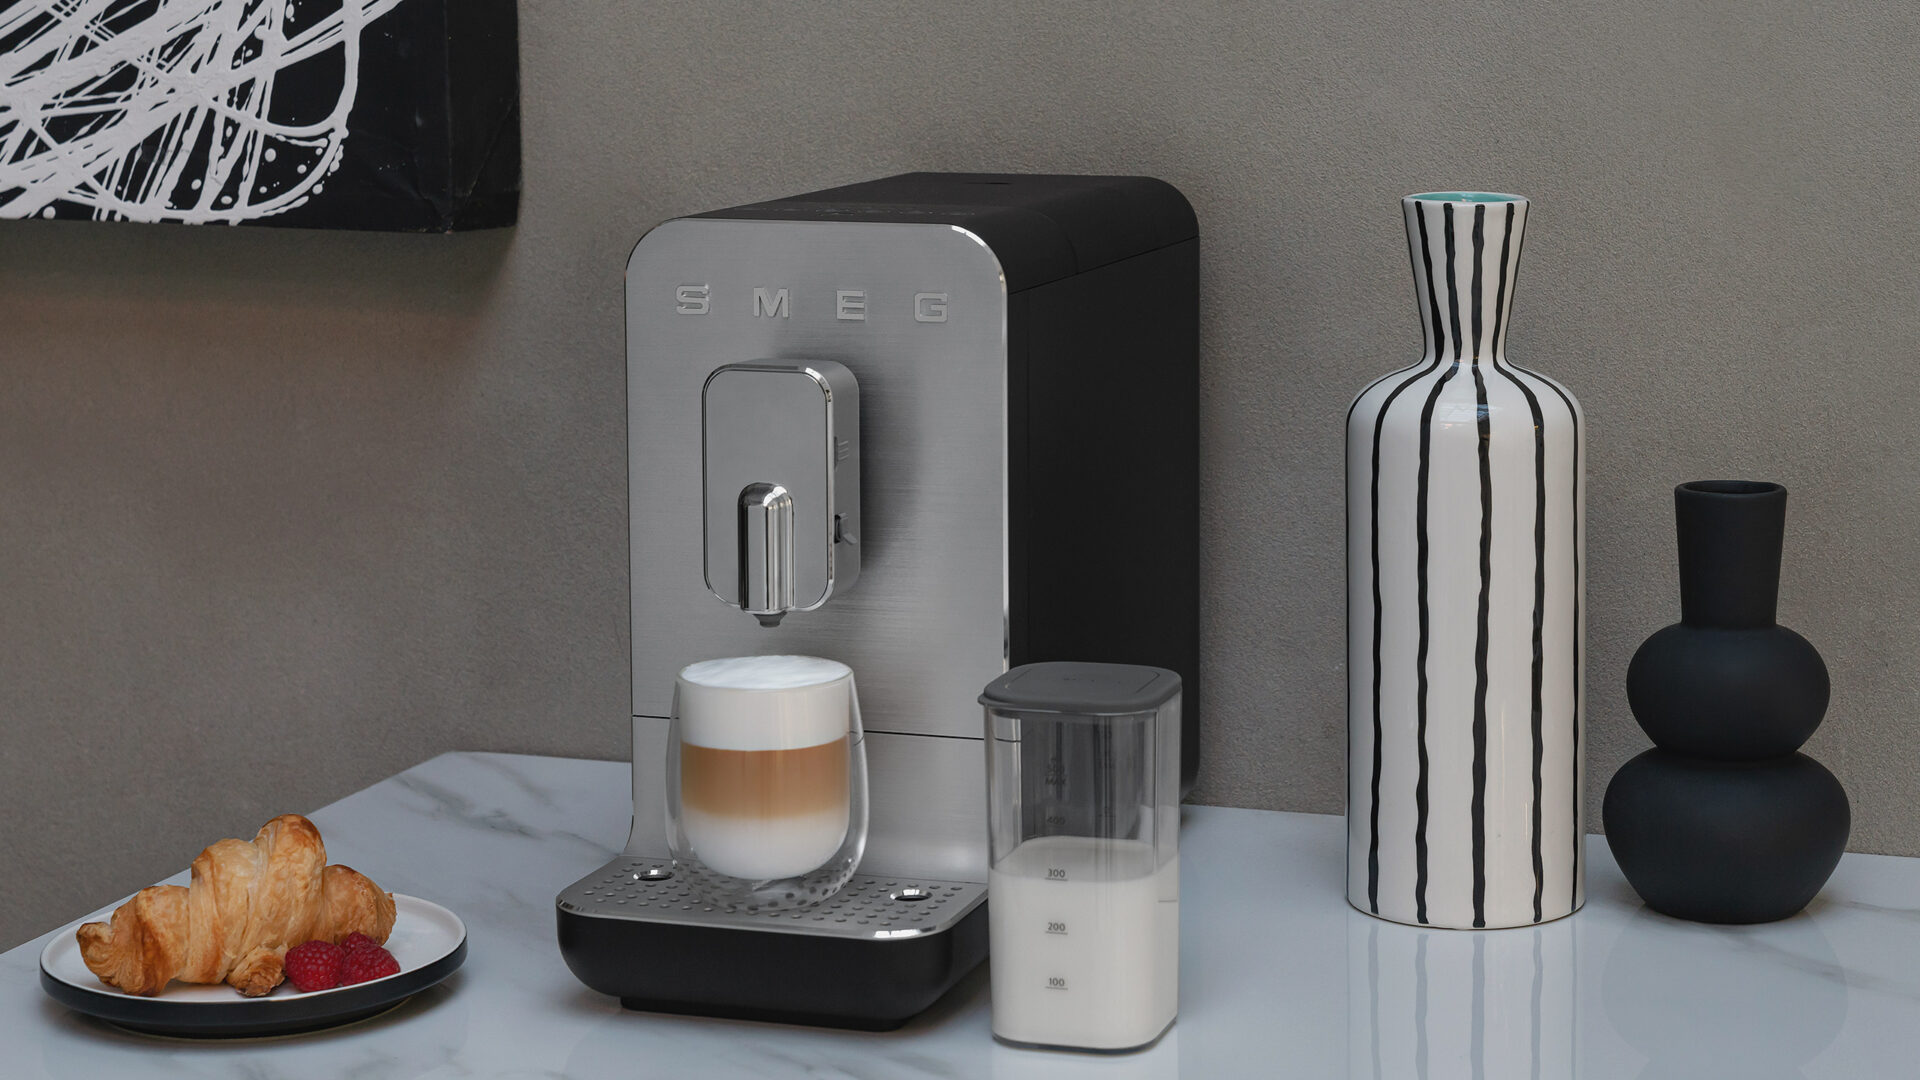 Smeg lancerer House of Coffee – og en ny kaffemaskine